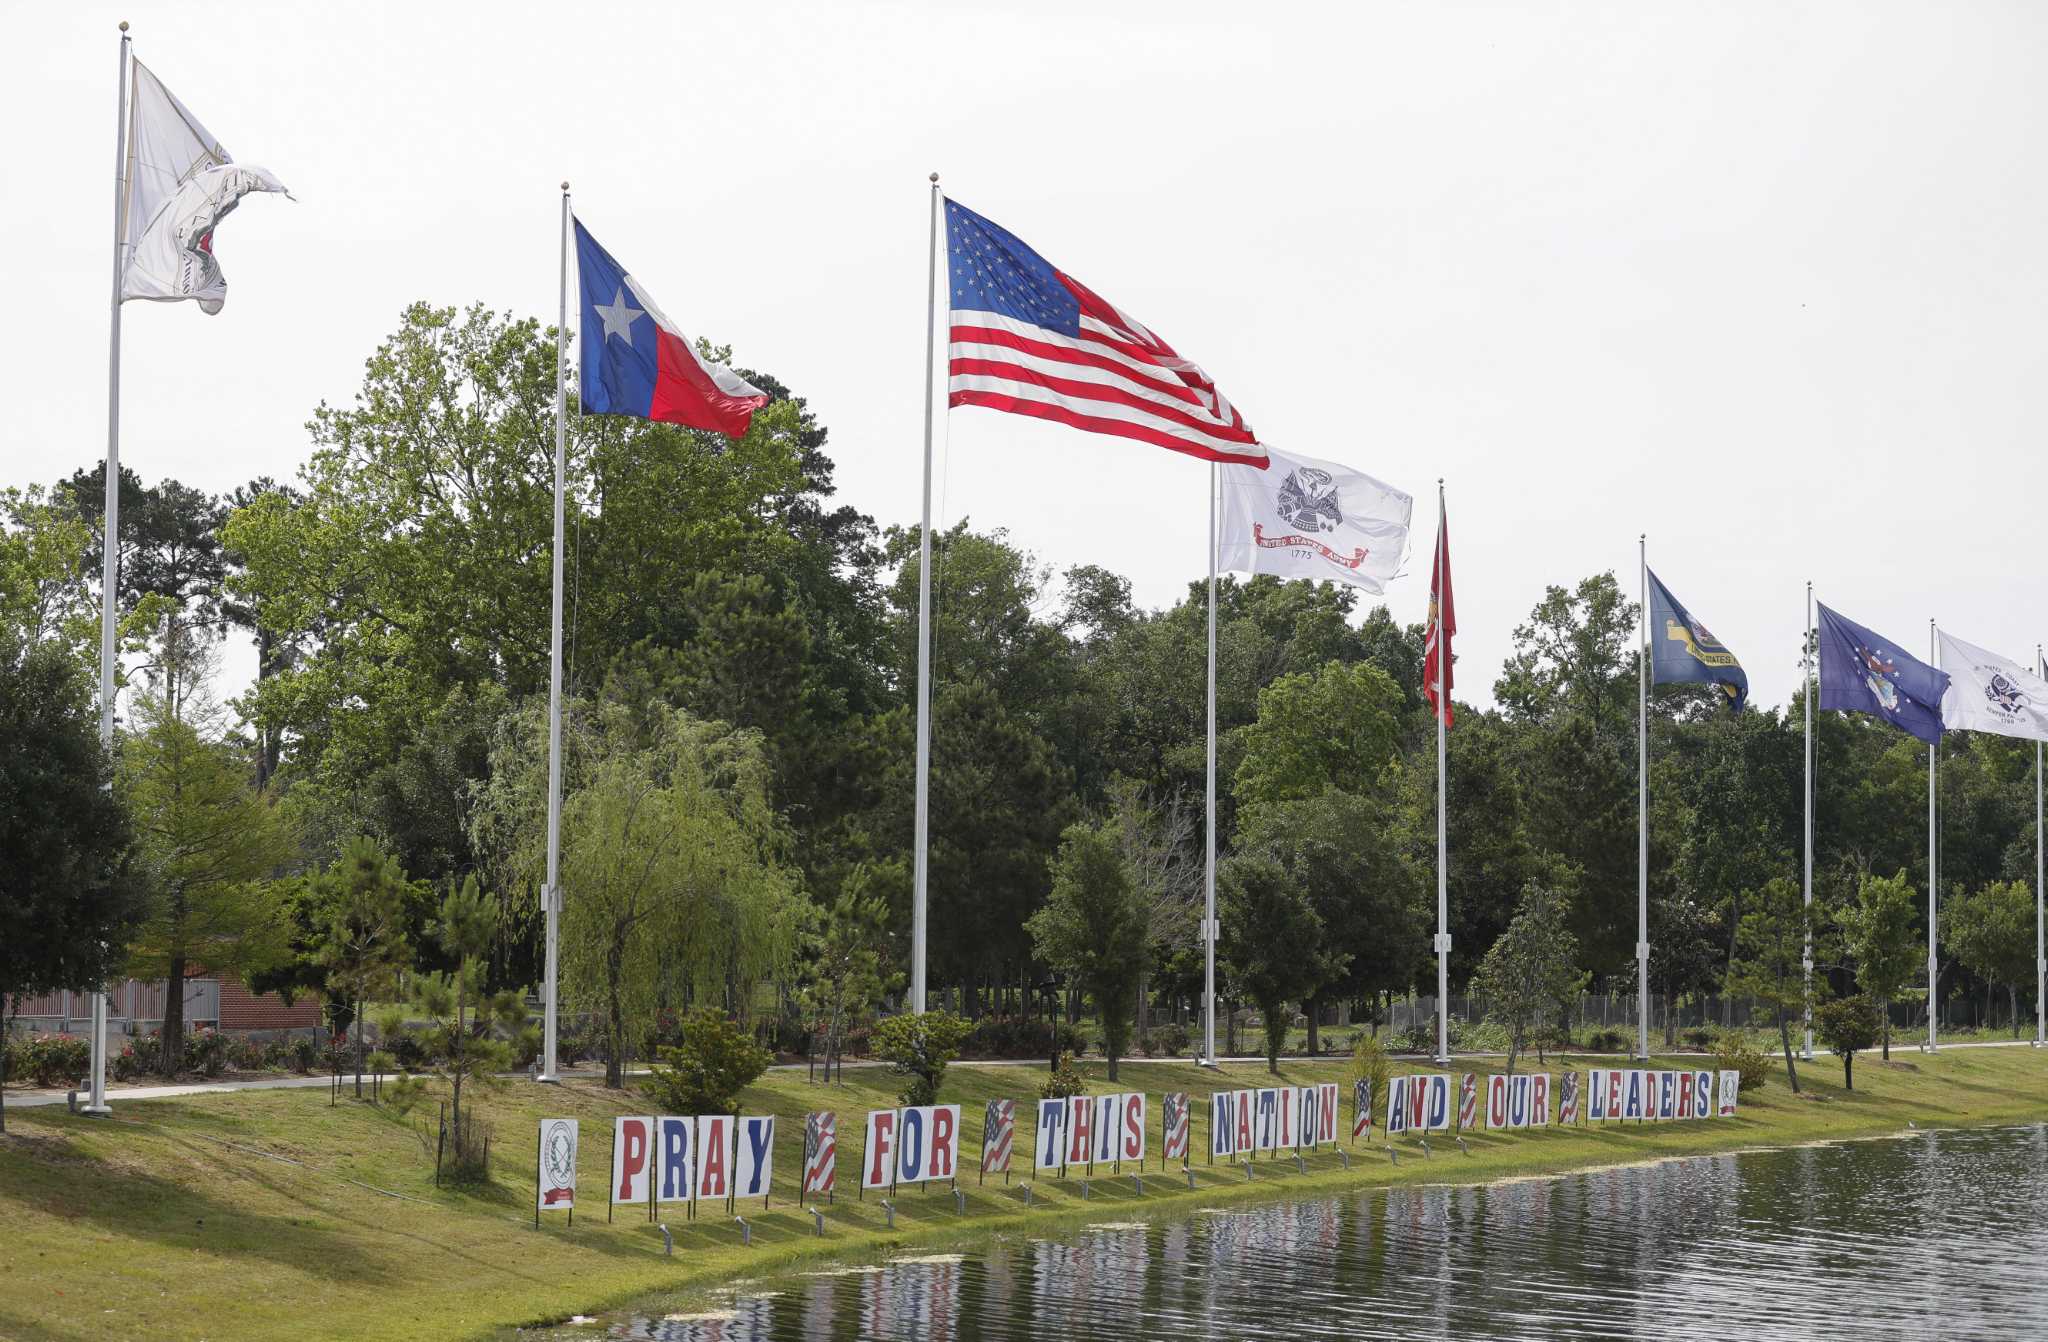 Veterans Memorial Park plans dedication event in May